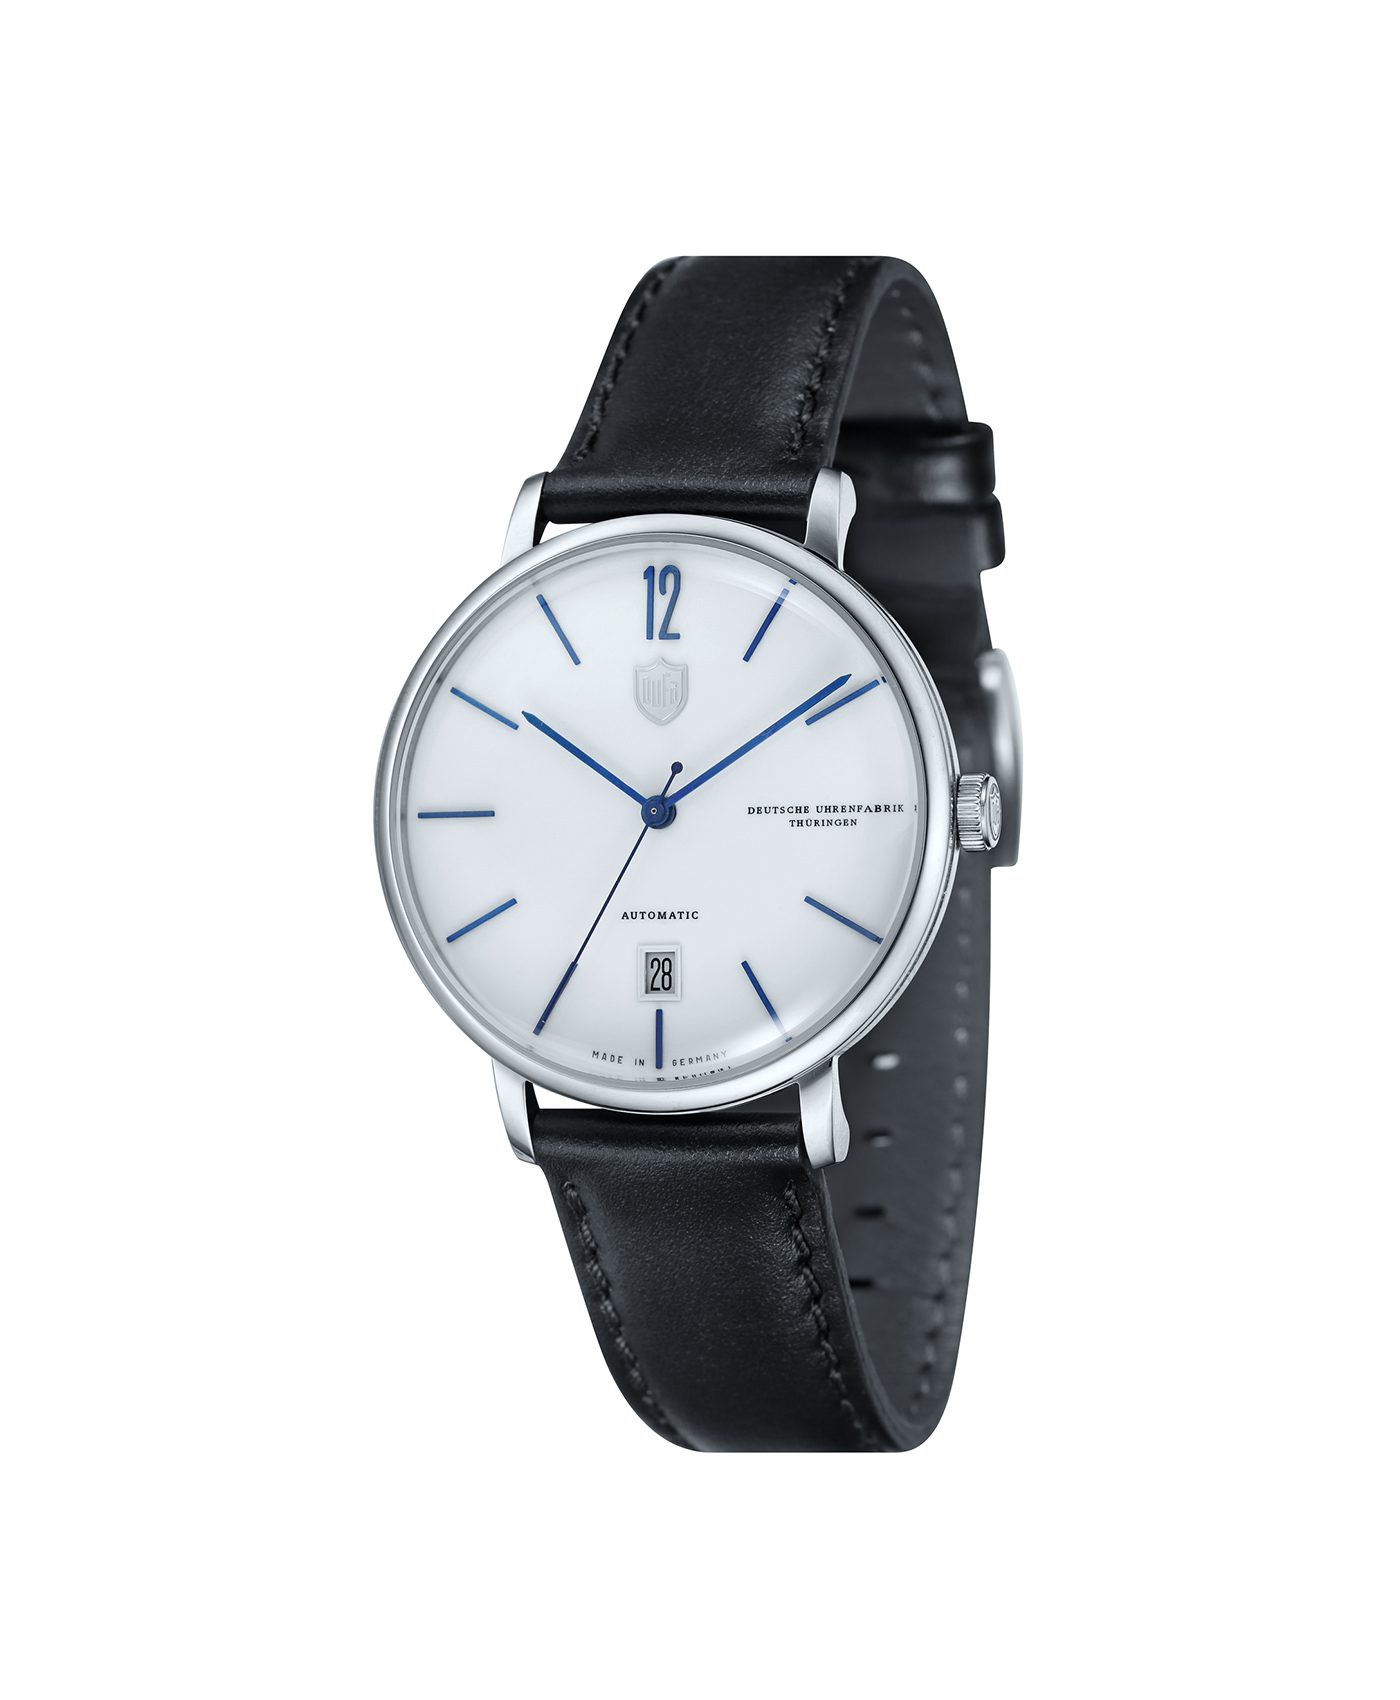 Dufa Breuer Automatic 9011 Df 9011 02 Watch Watchbandit